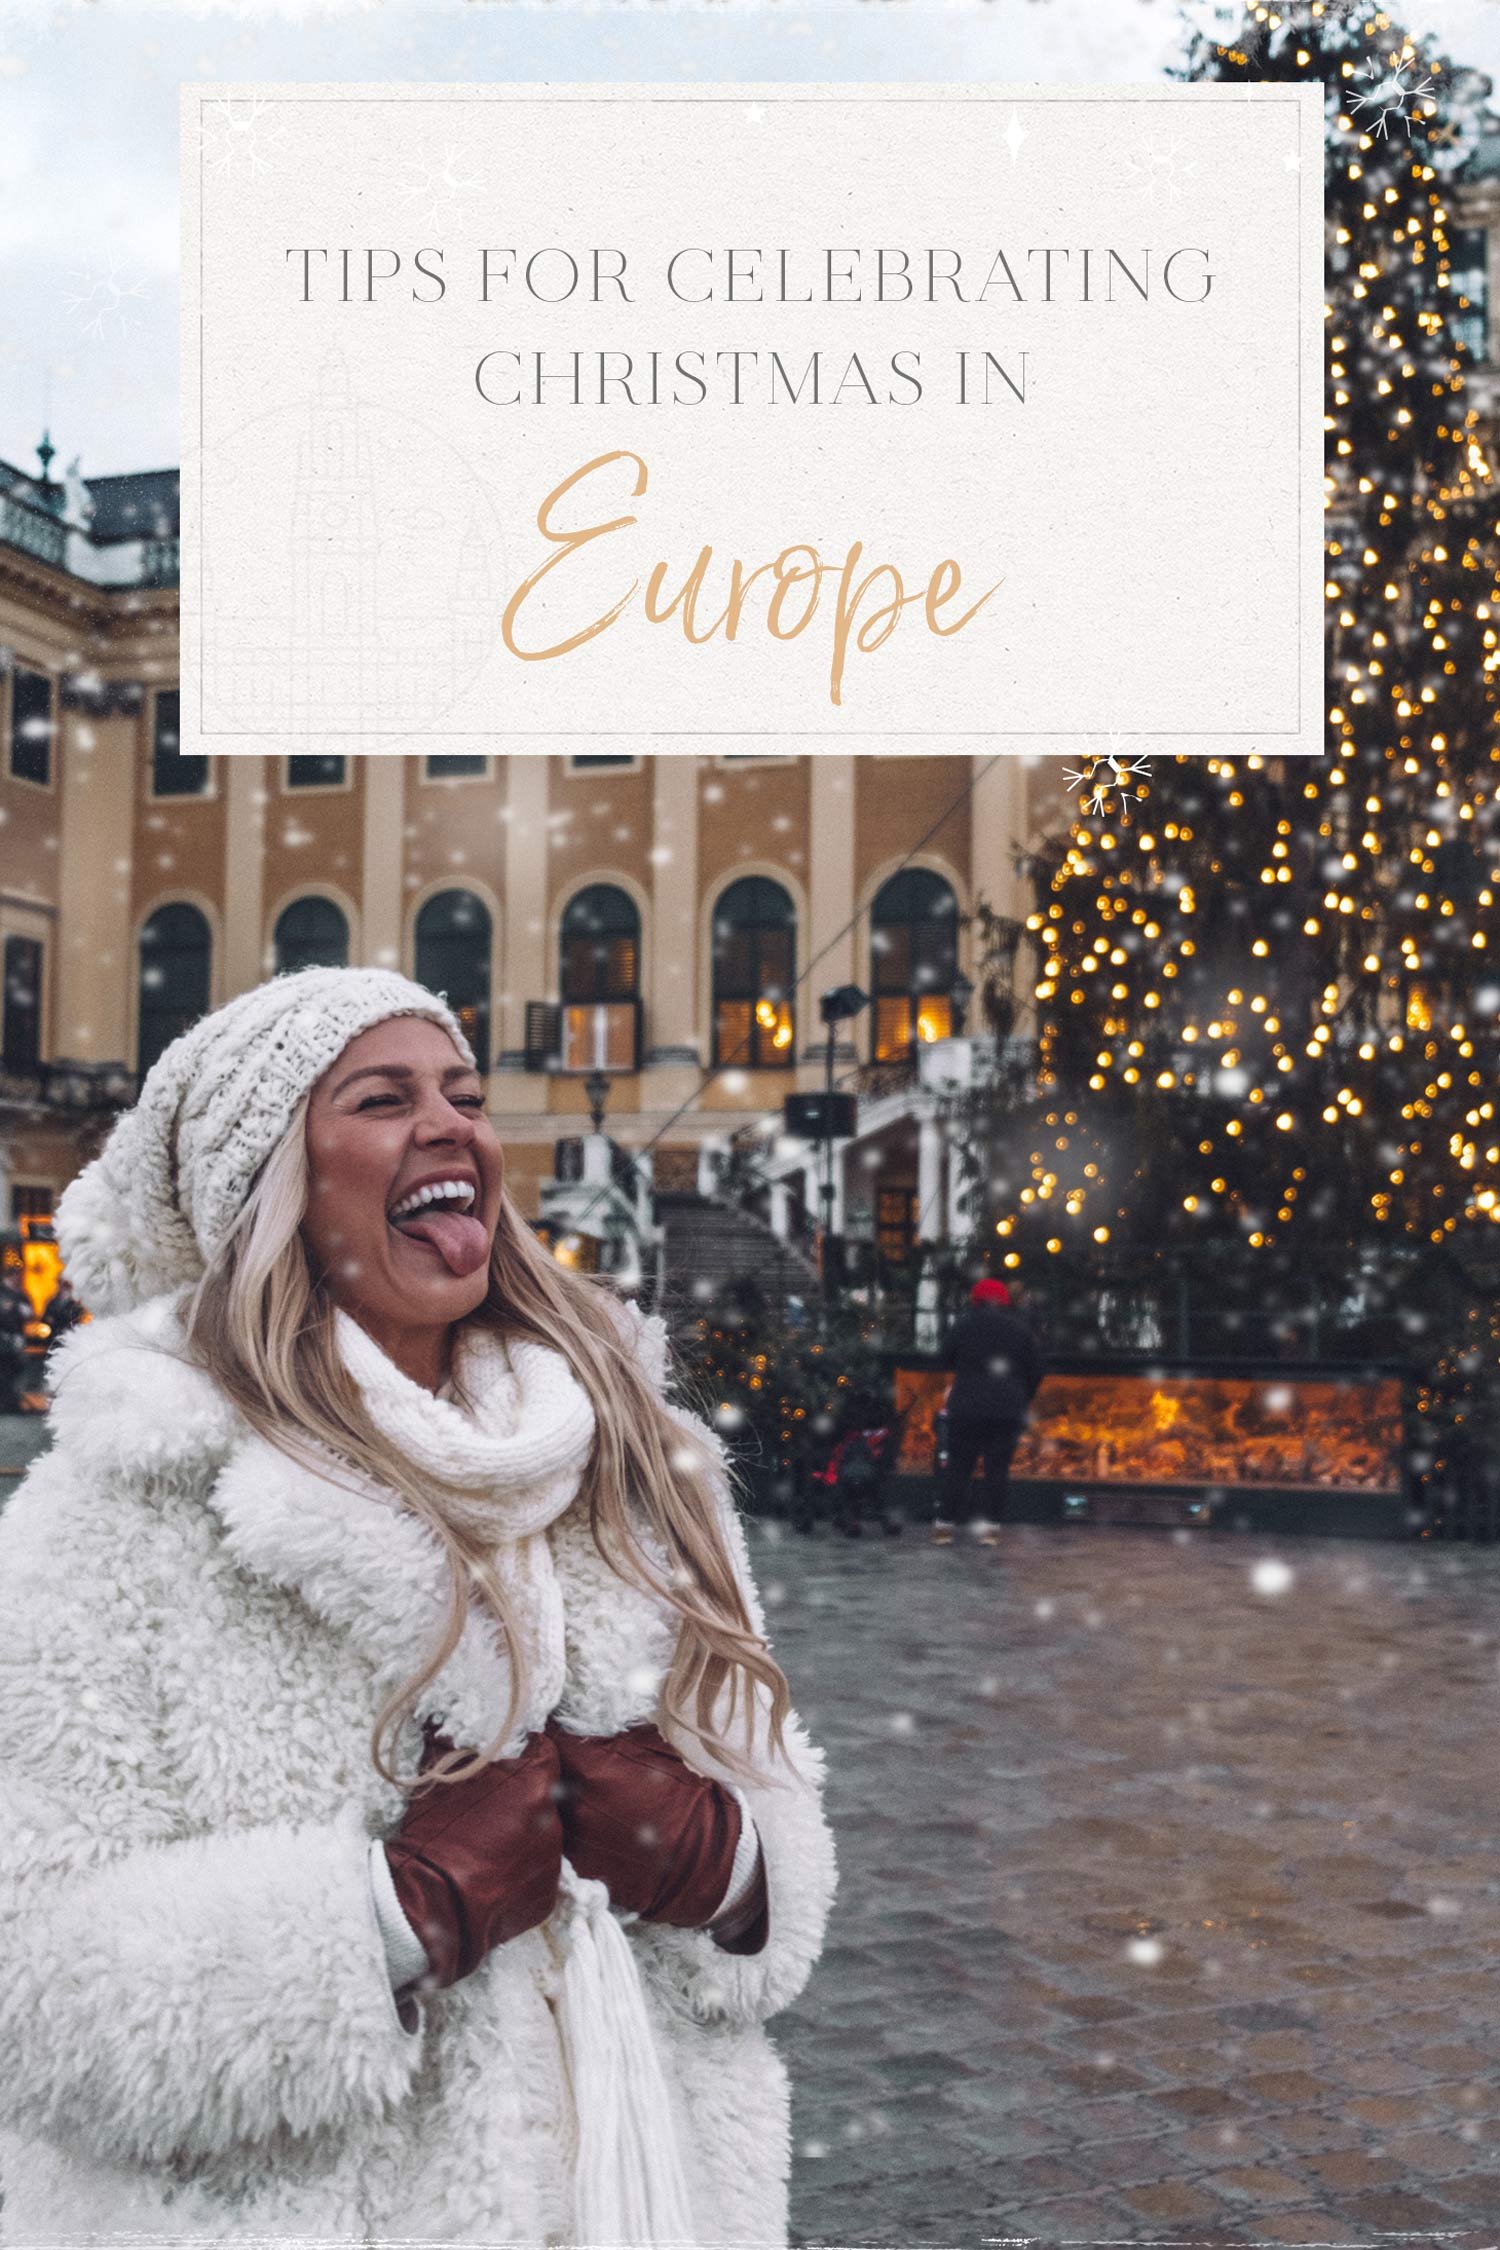 Tips for Celebrating Christmas in Europe